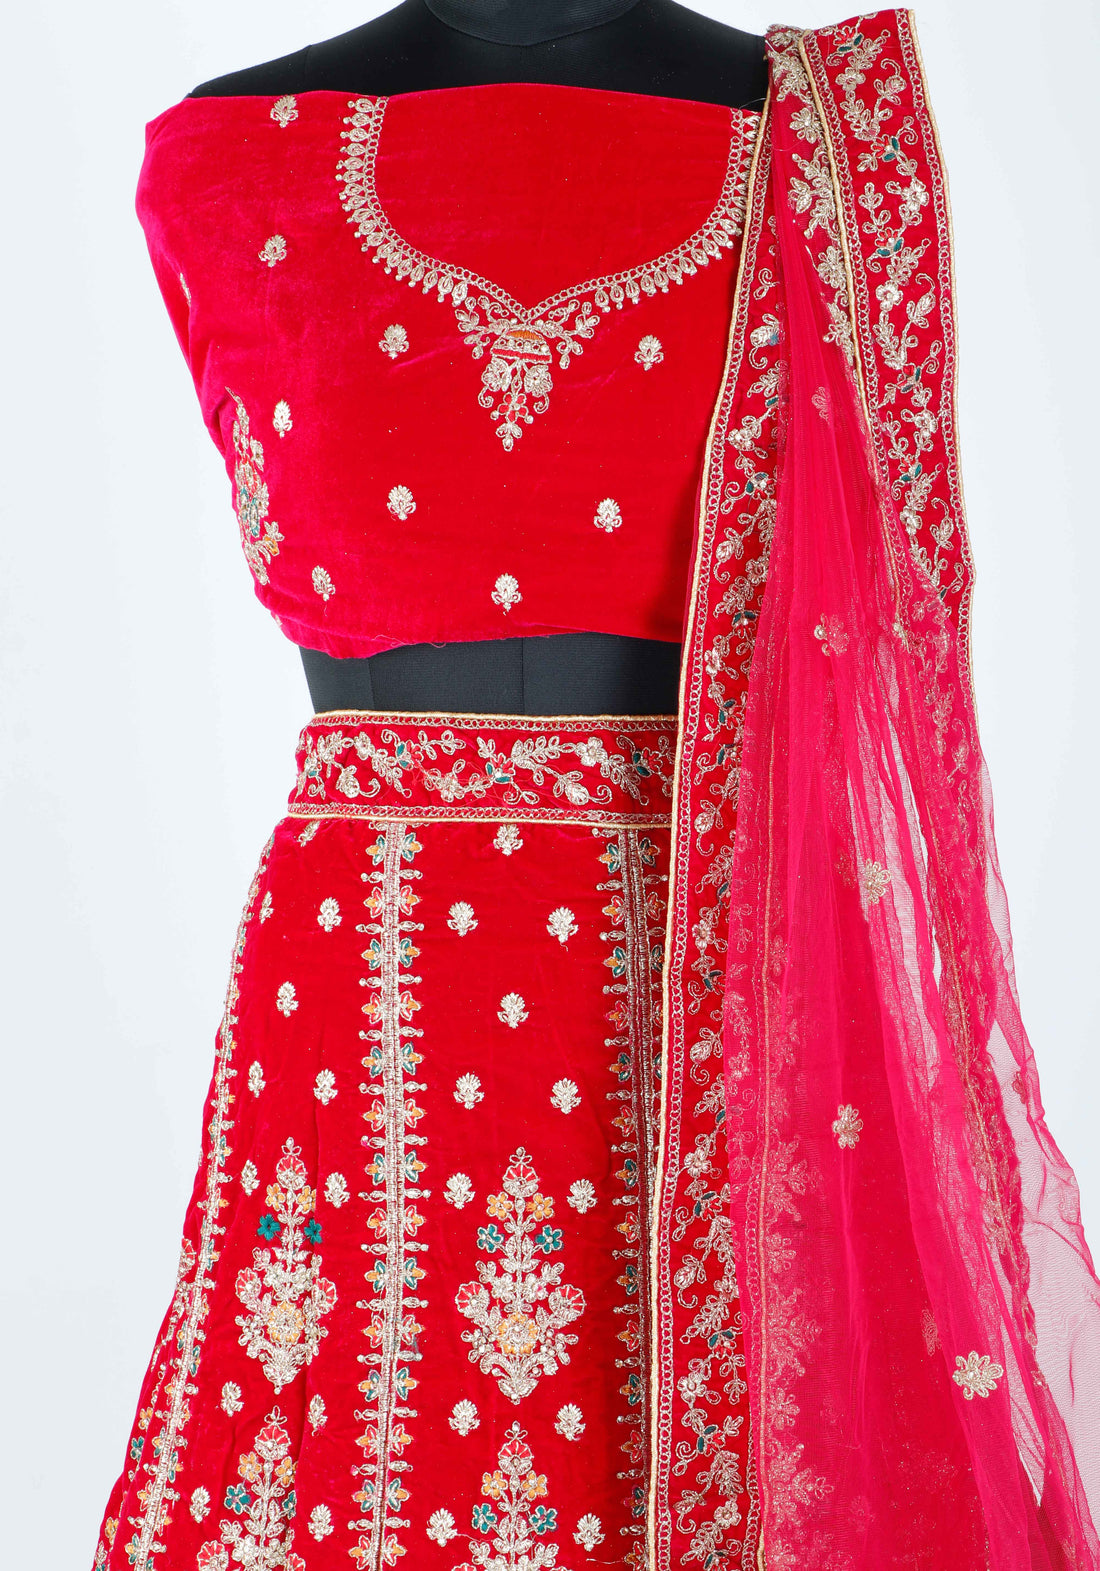 Red Colour Embroidered Semi - Stitched Bridal Wedding Lehenga